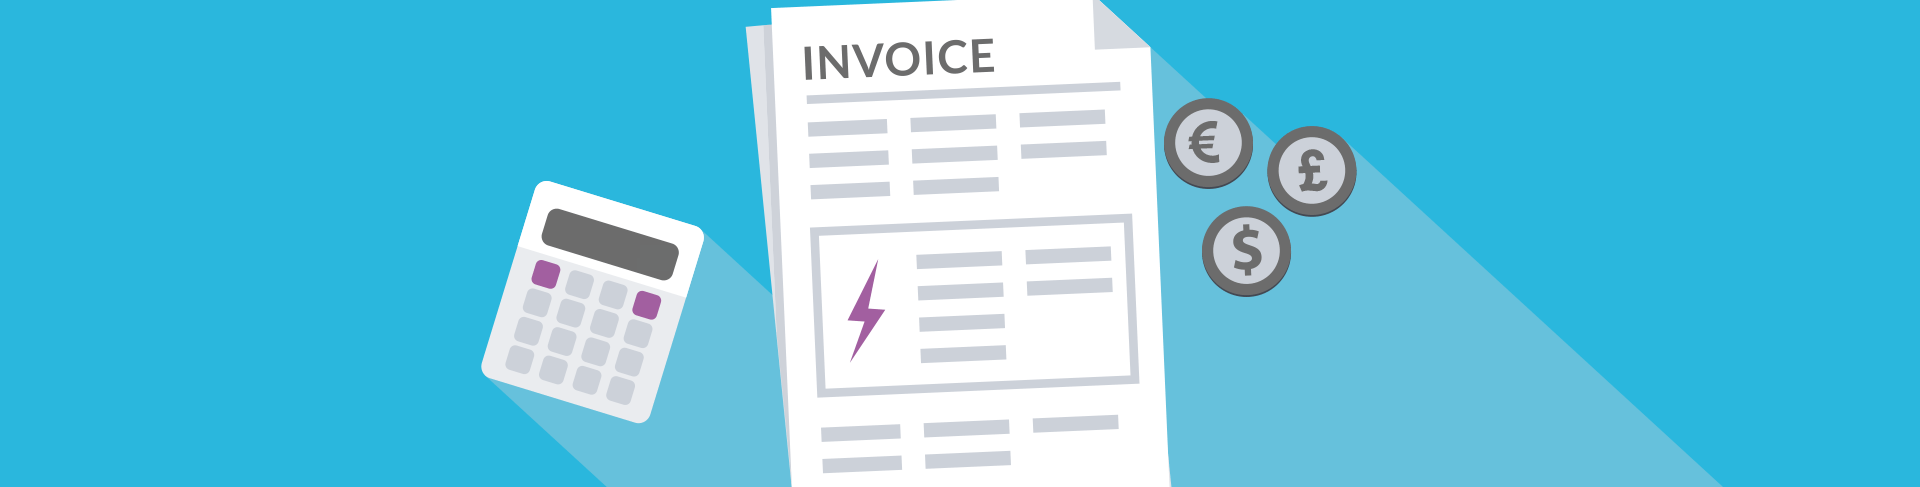 electricity-invoice